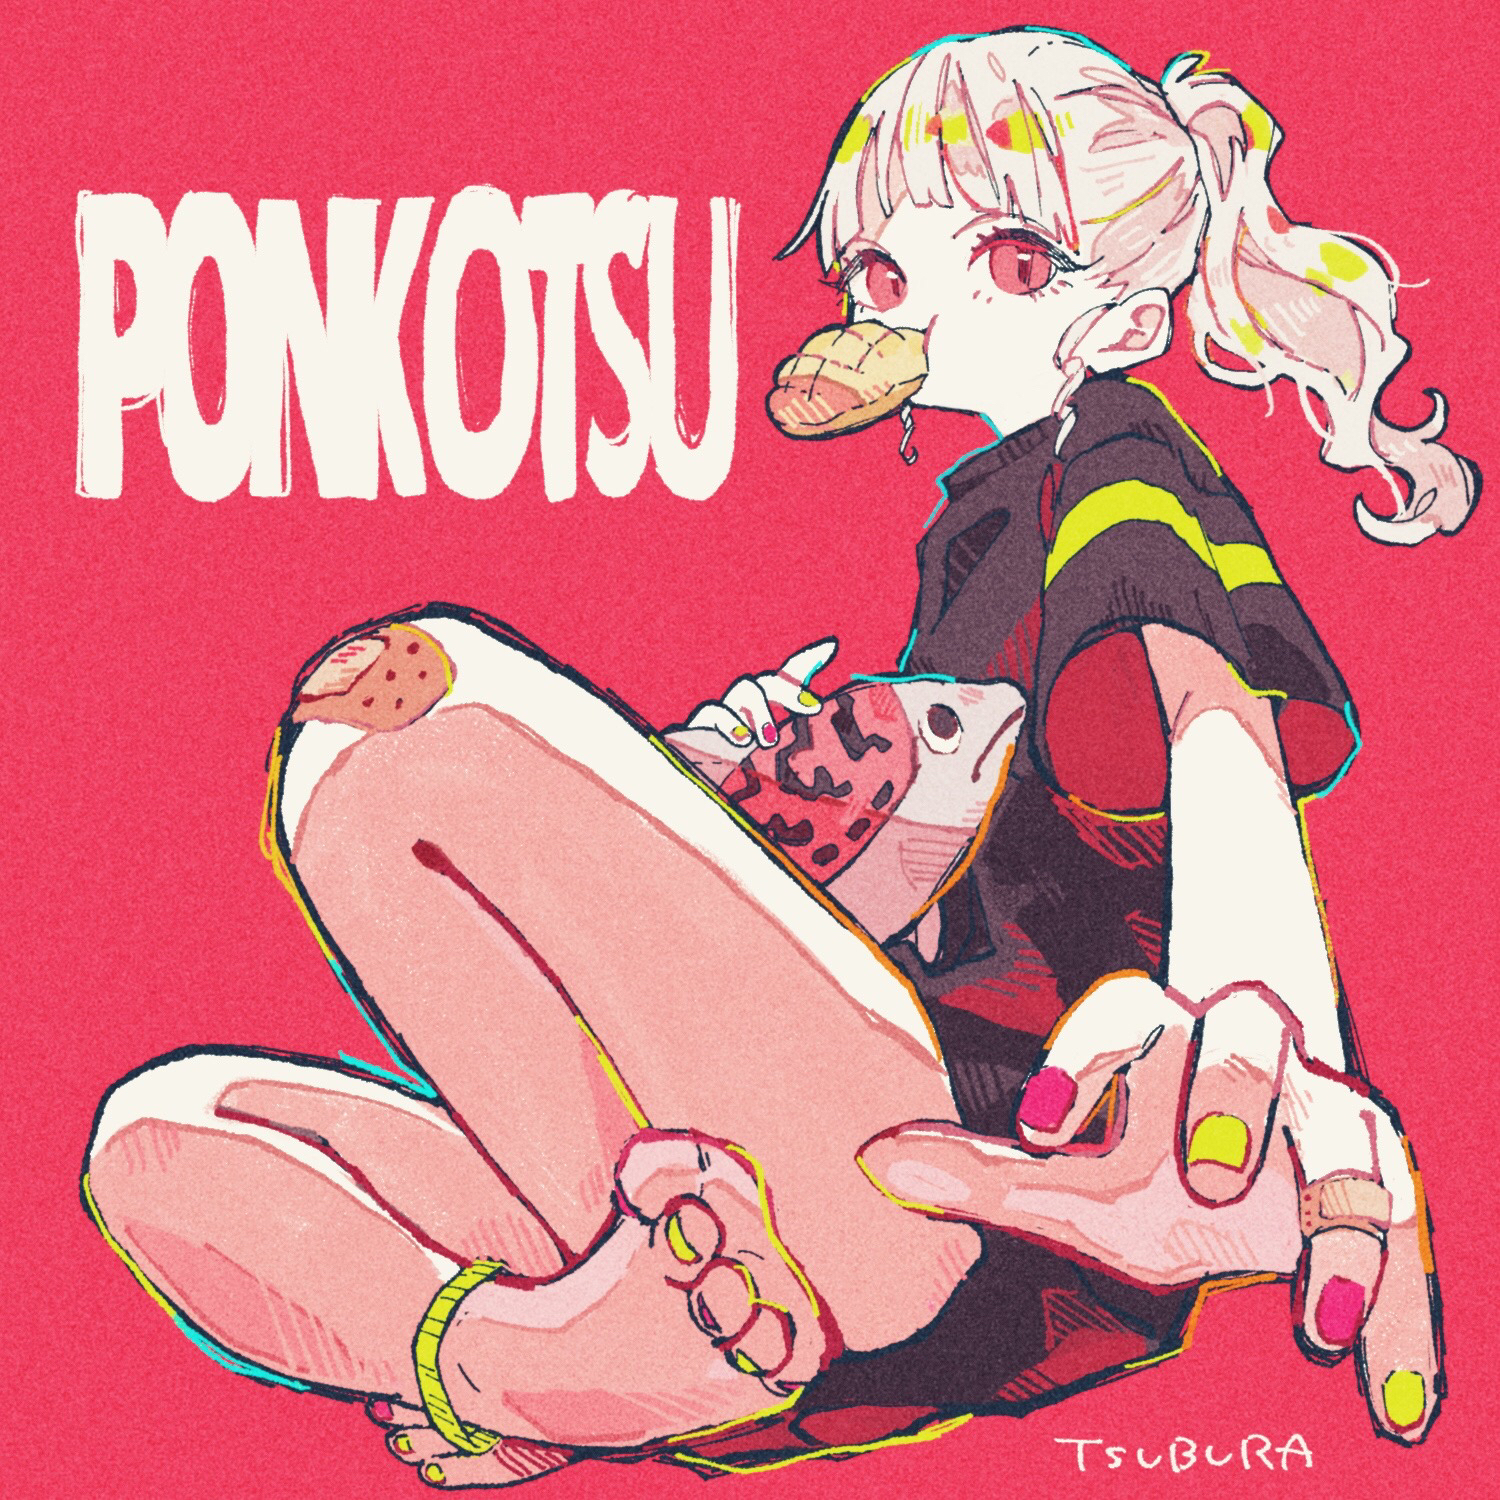 Ponkotsu插画图片壁纸